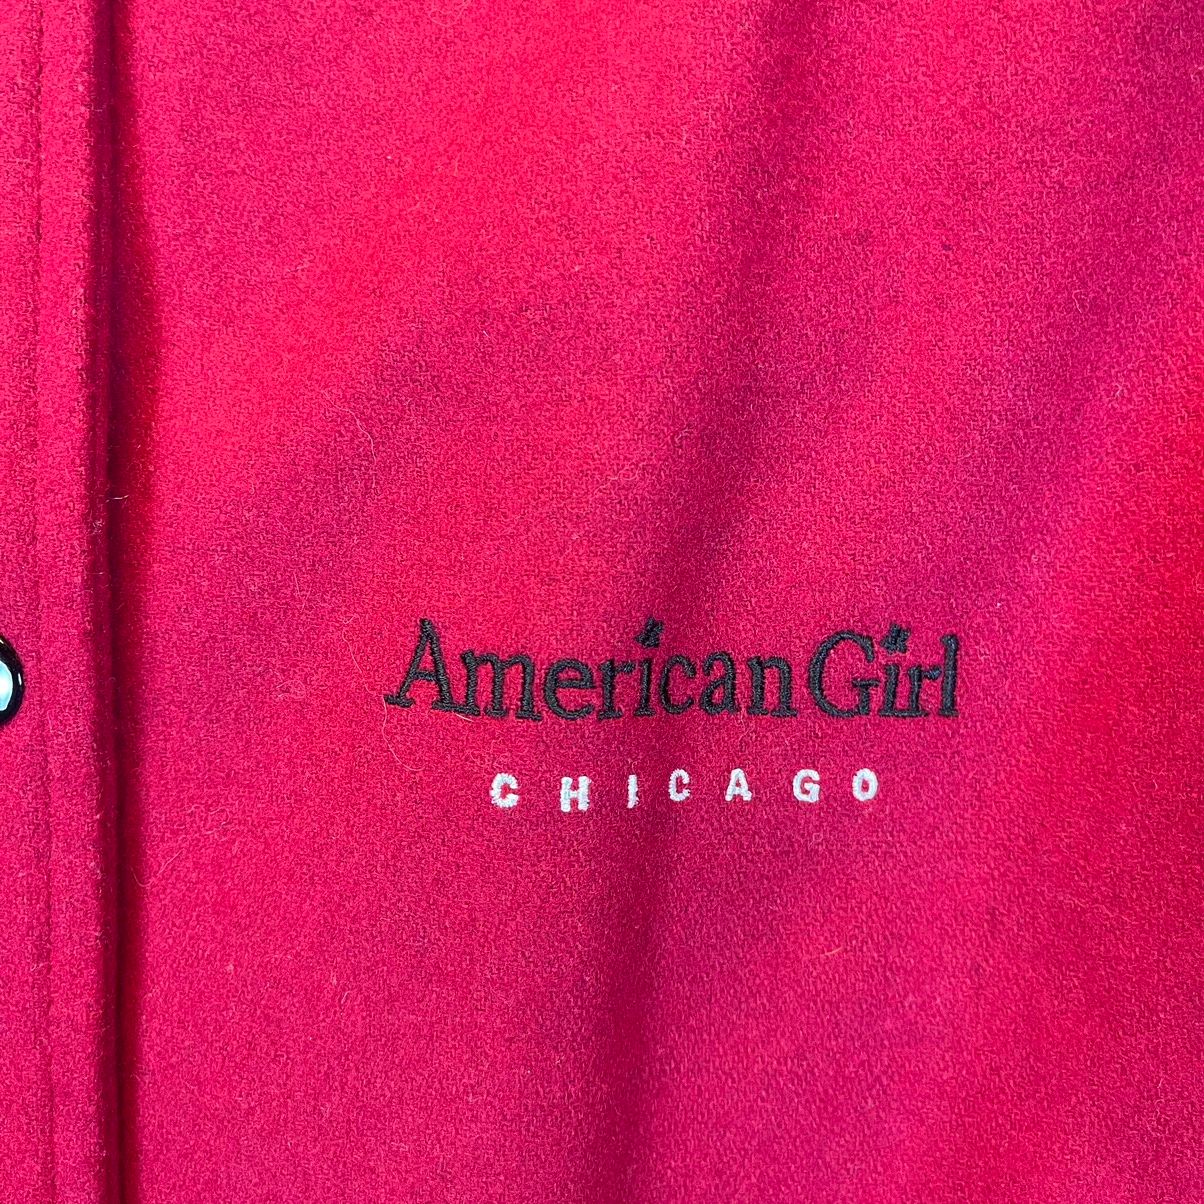 Vintage Vtg American Girl Chicago Letterman Jacket Adult Size XL Size US XL / EU 56 / 4 - 2 Preview